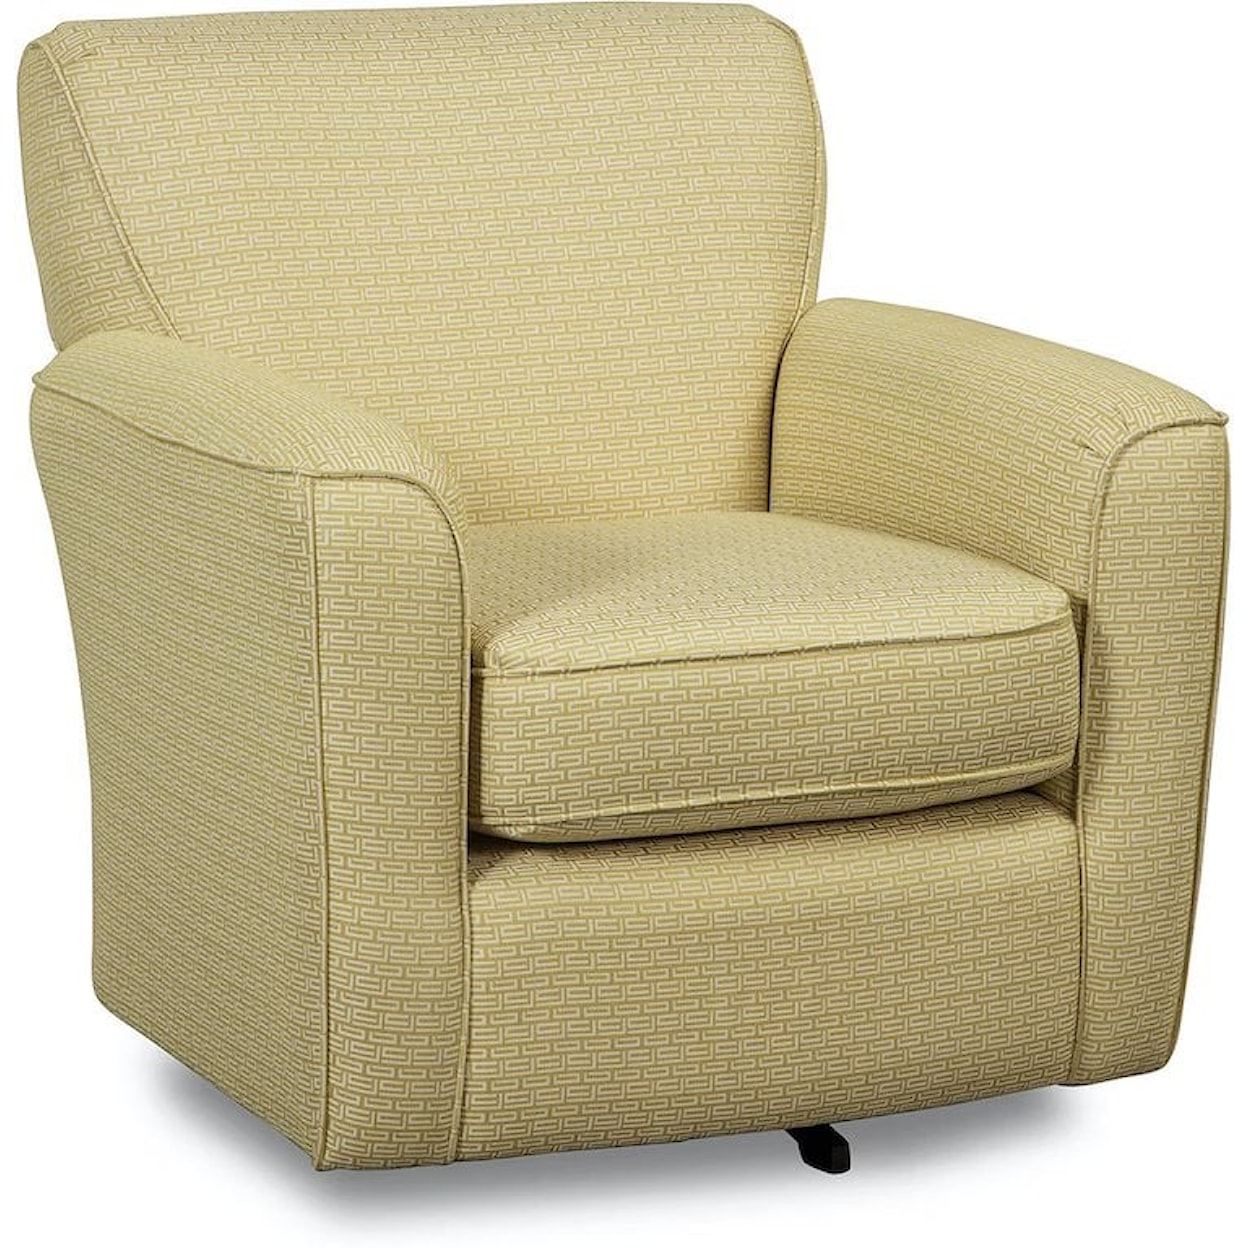 Craftmaster 068710 Upholstered Swivel Chair